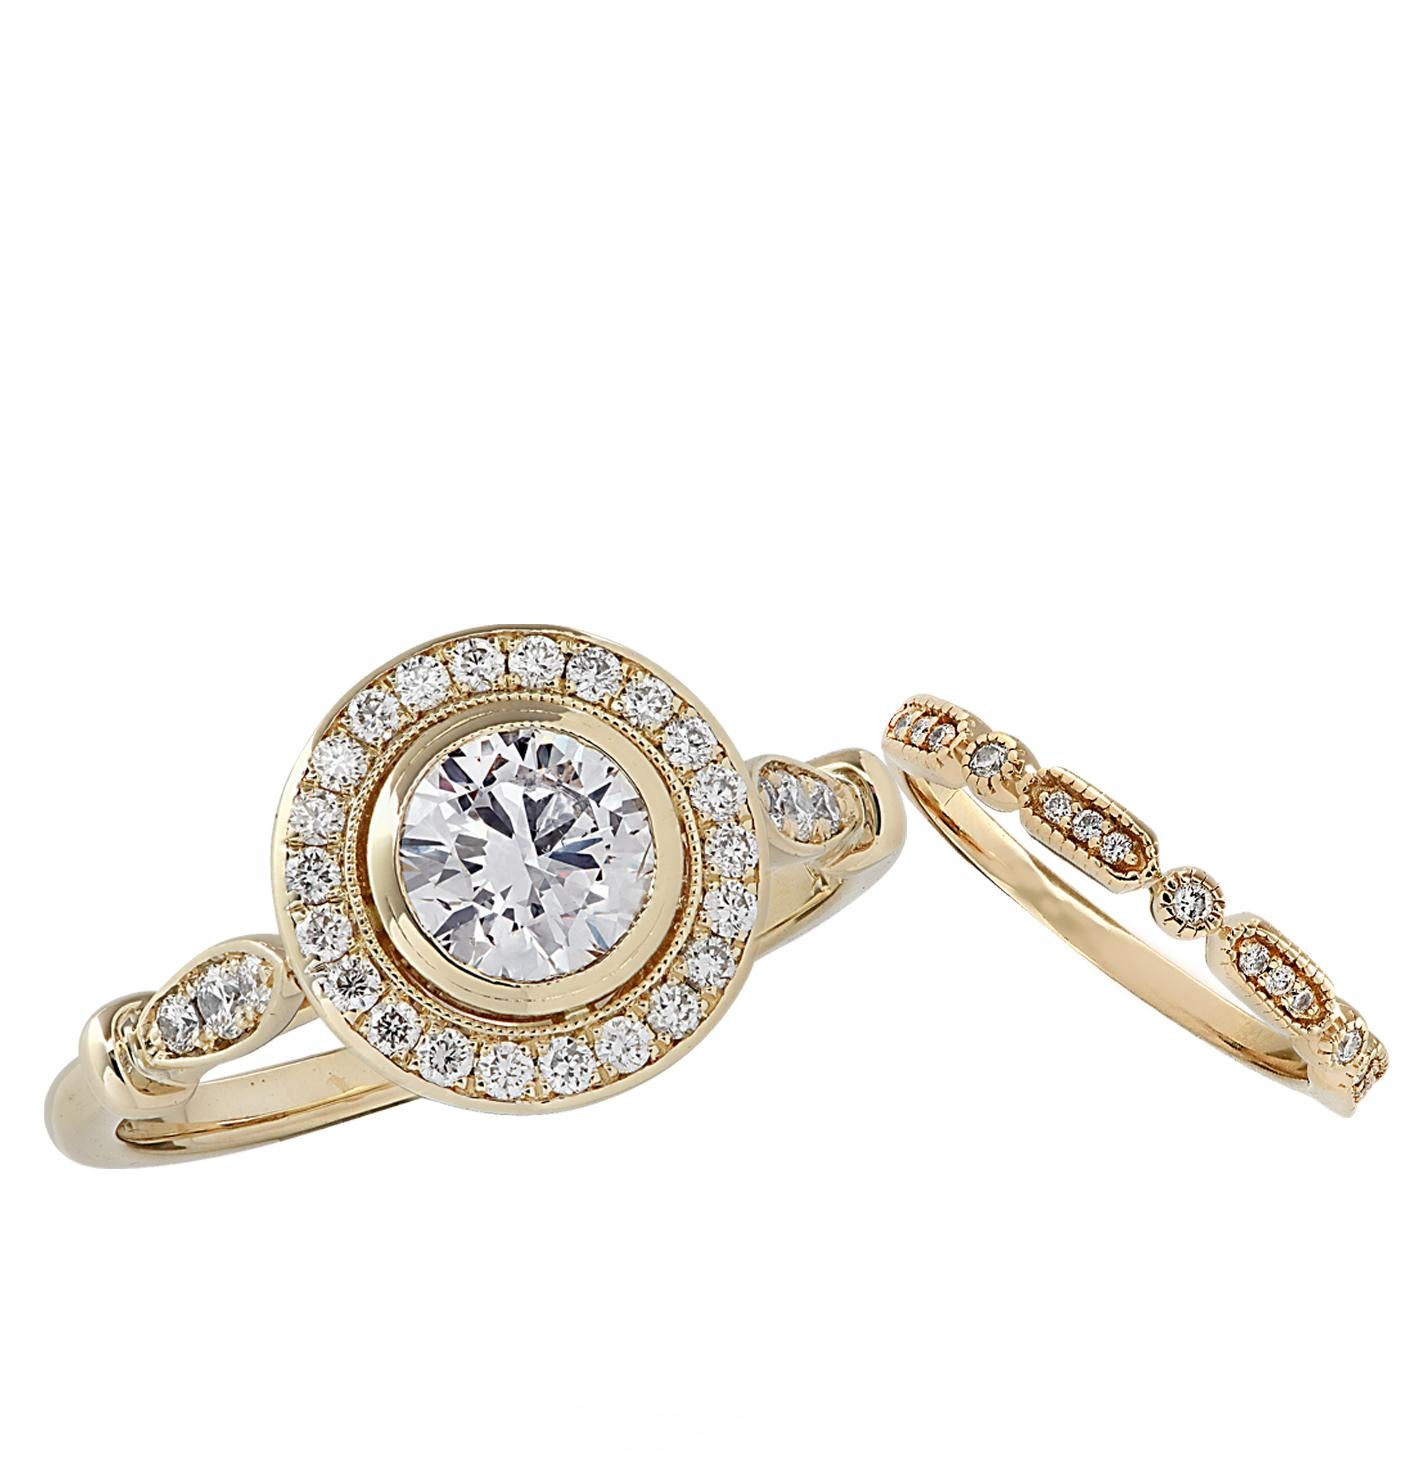 Modern GIA Certified .70 Carat Diamond Engagement Ring and Wedding Band Set